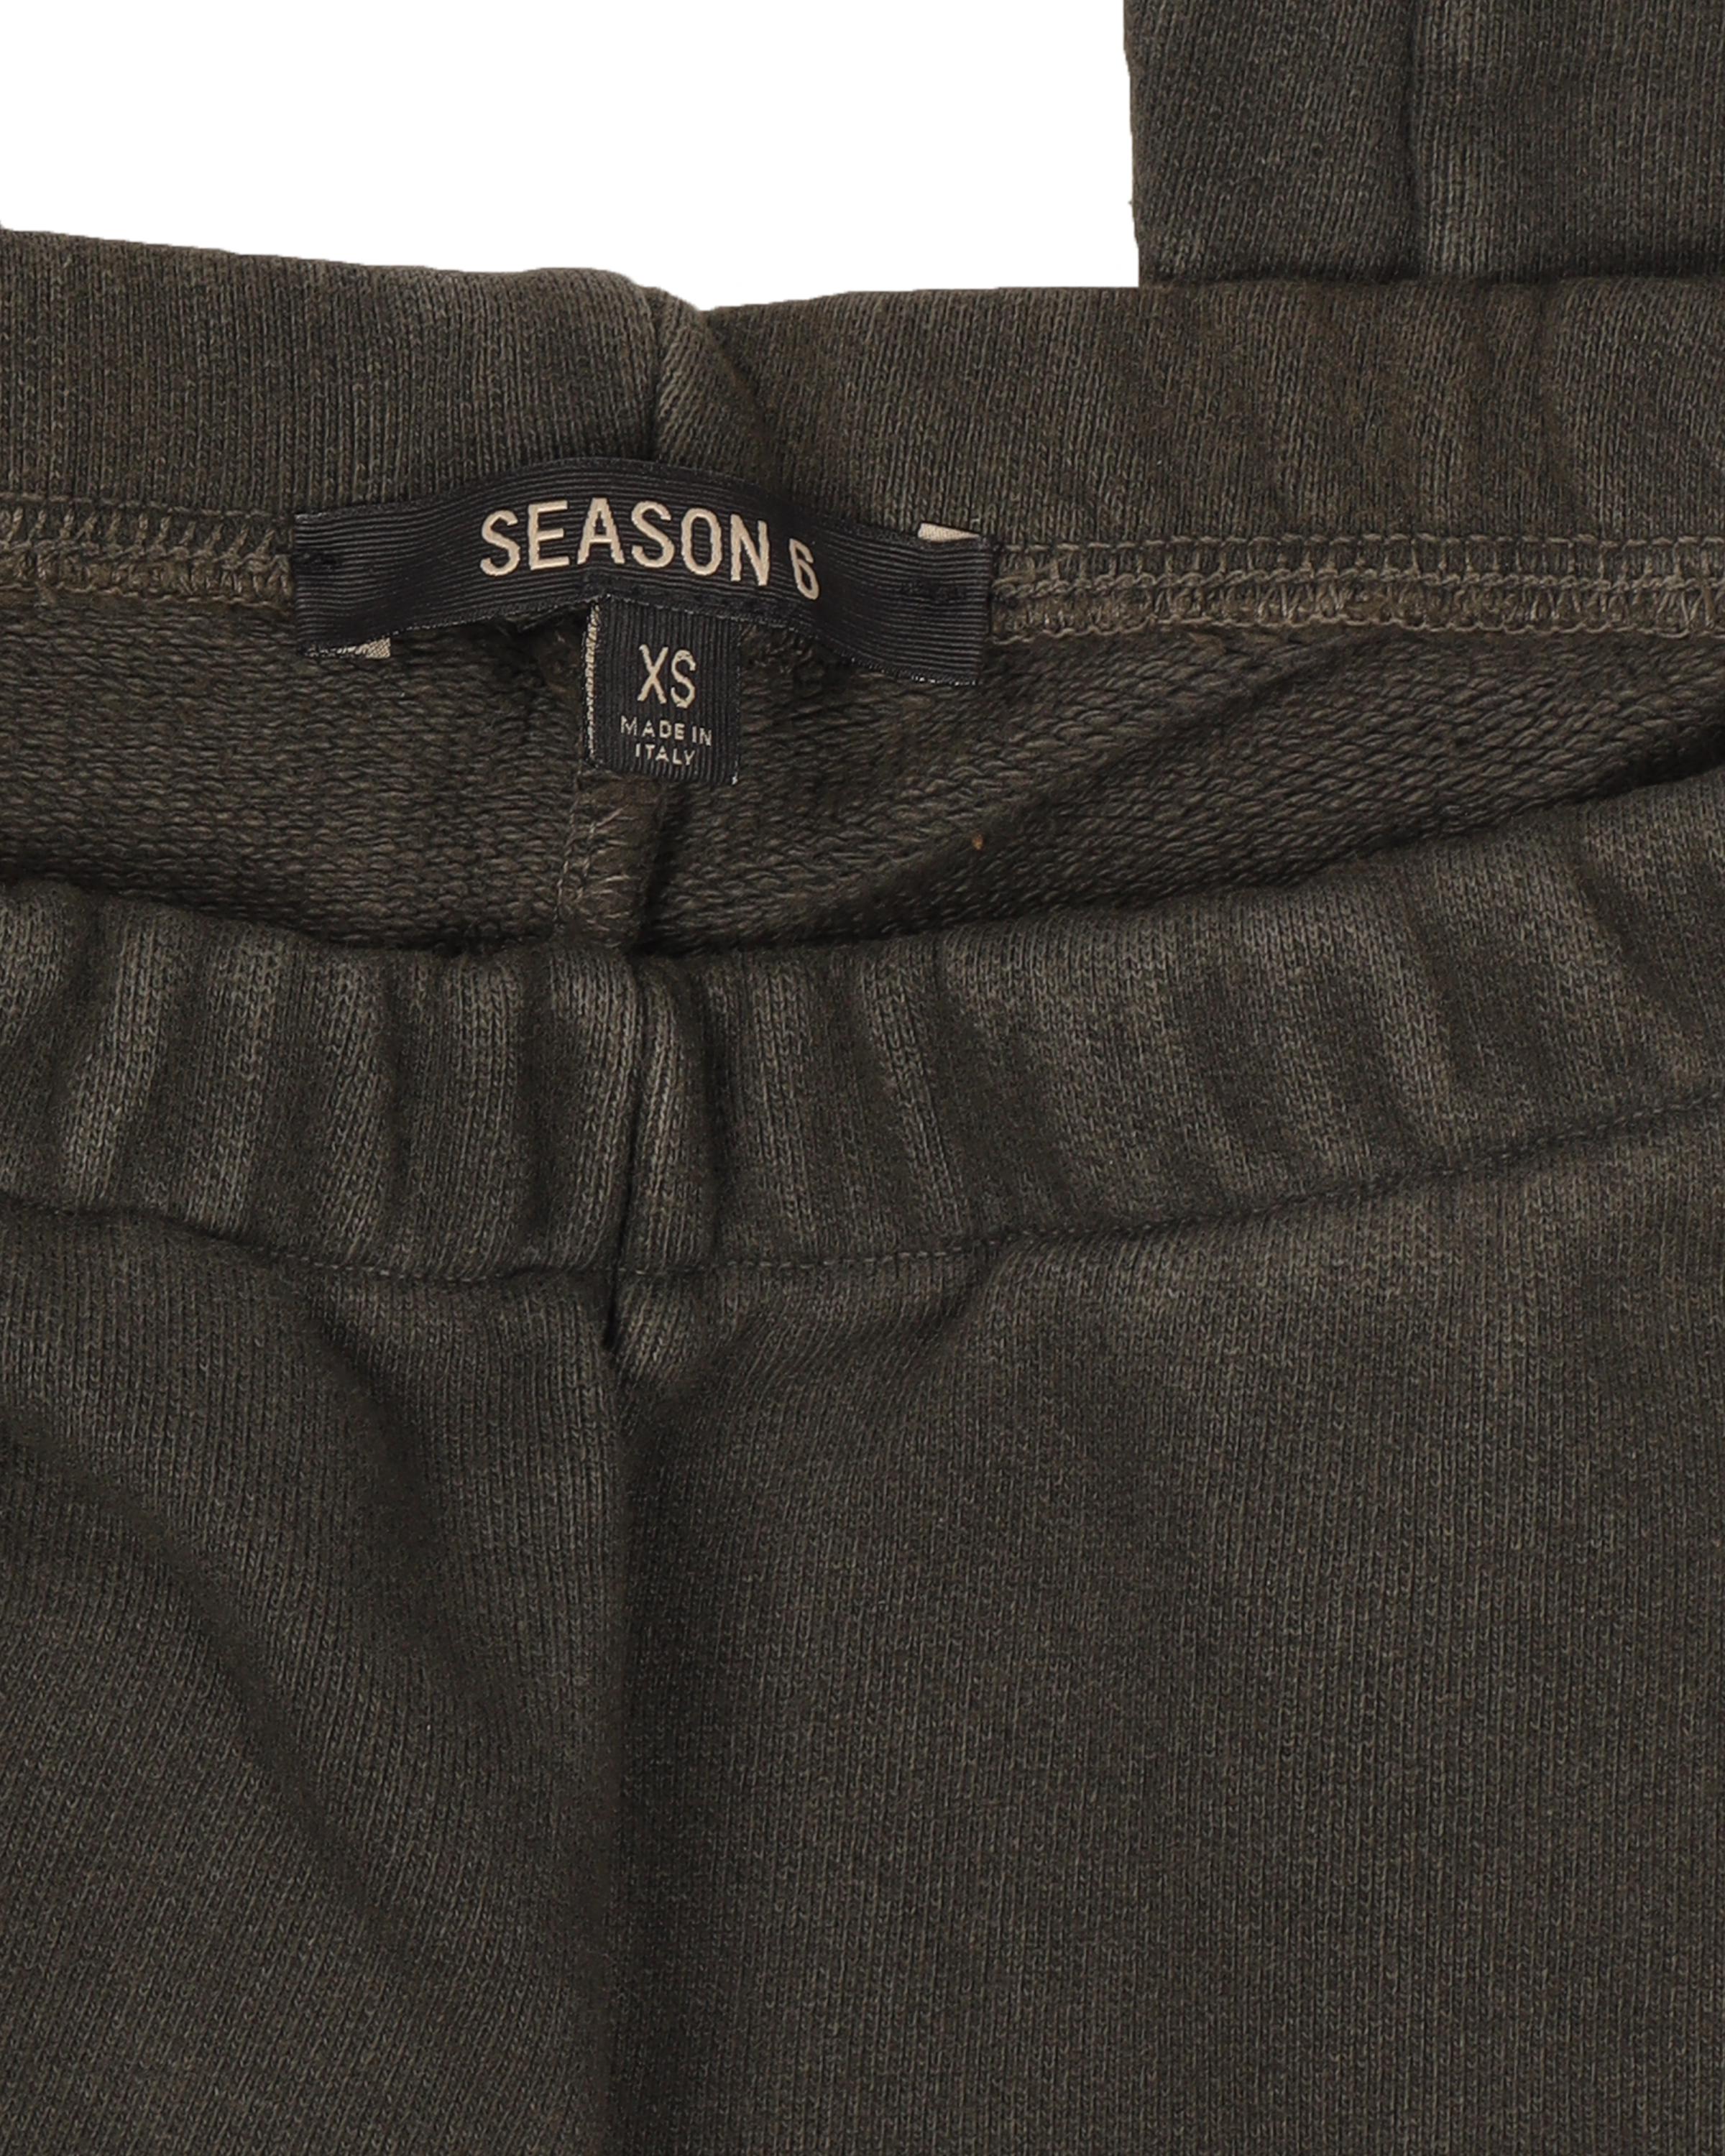 Yeezy Season 6 Seamless Mid-Rise Leggings - Brown, 9 Rise Pants, Clothing  - WYEEZ21459